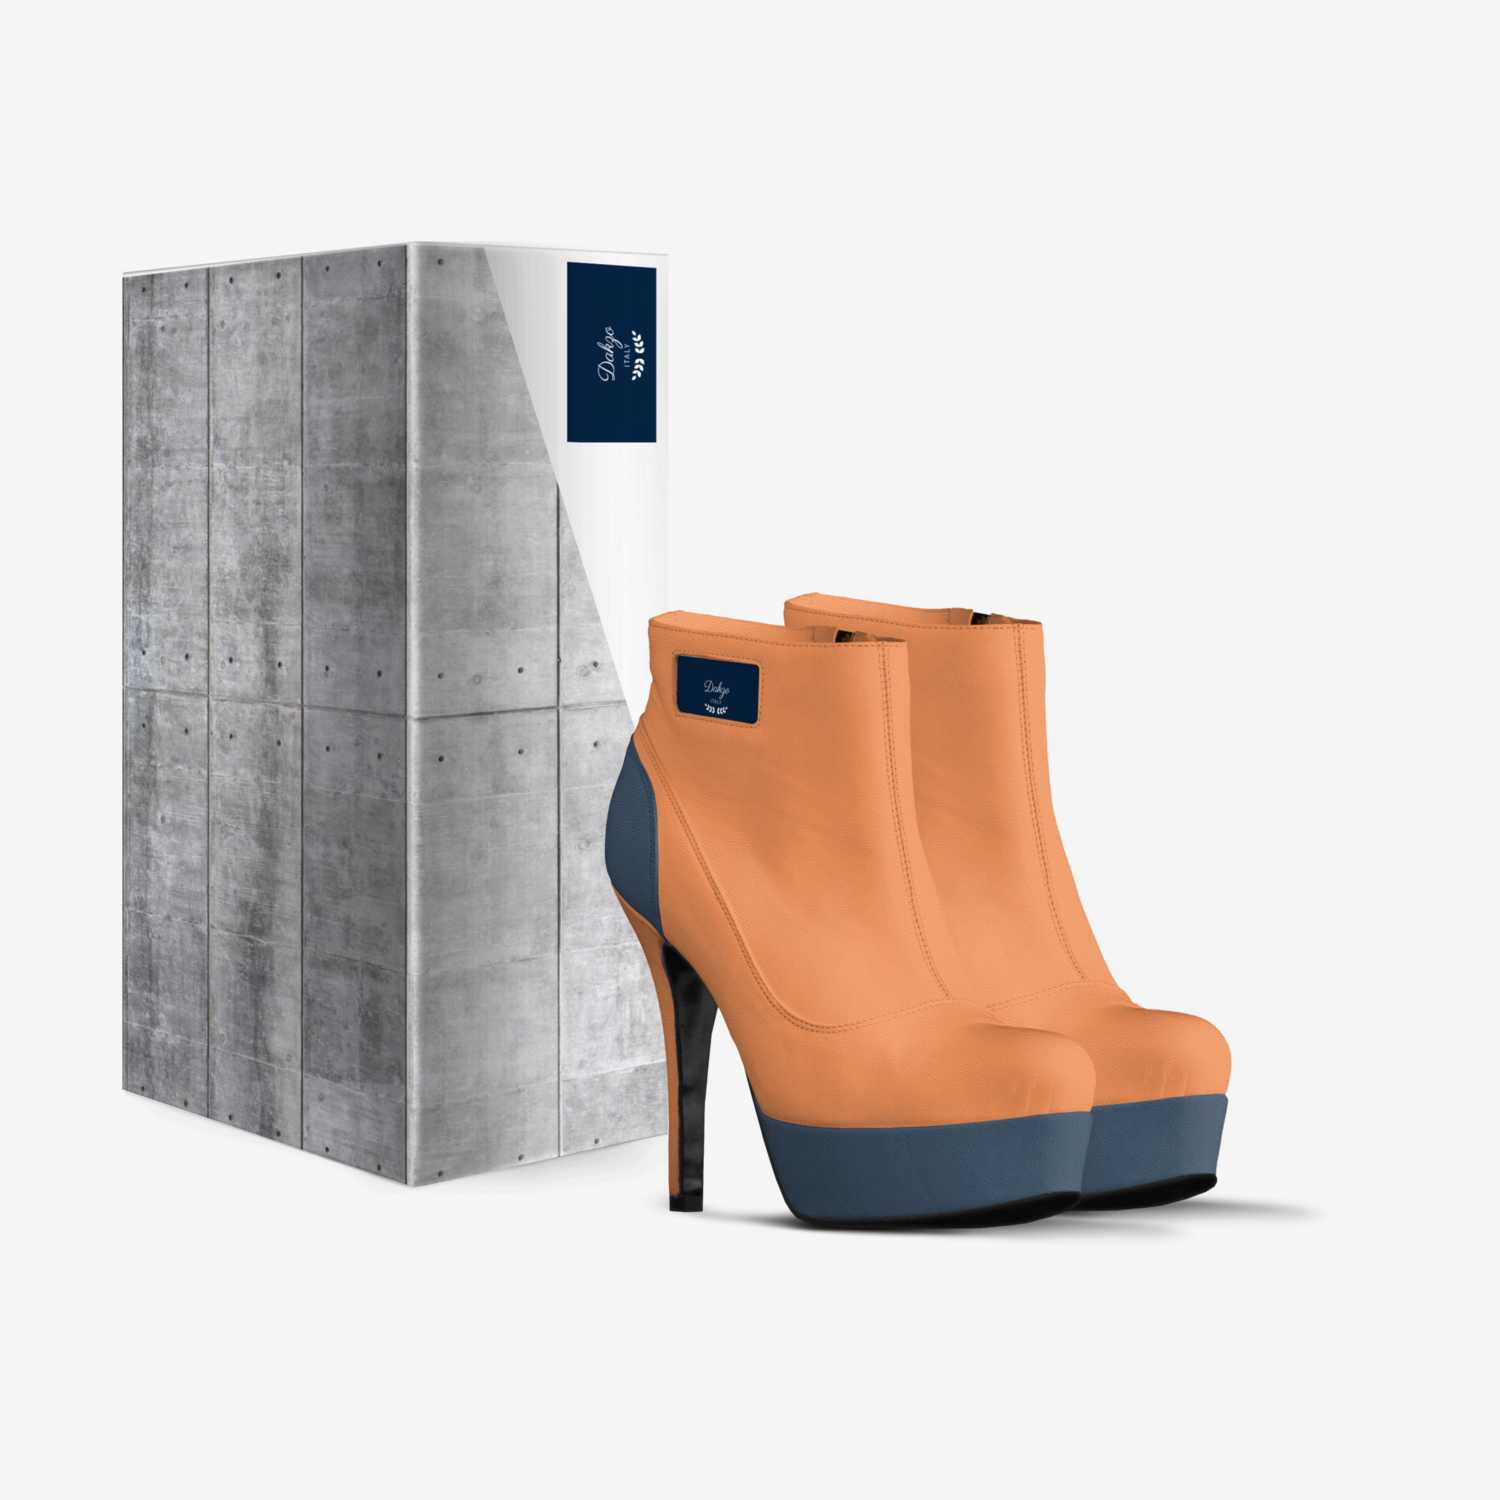 Dakzo custom made in Italy shoes by Dakalo Mondlane | Box view